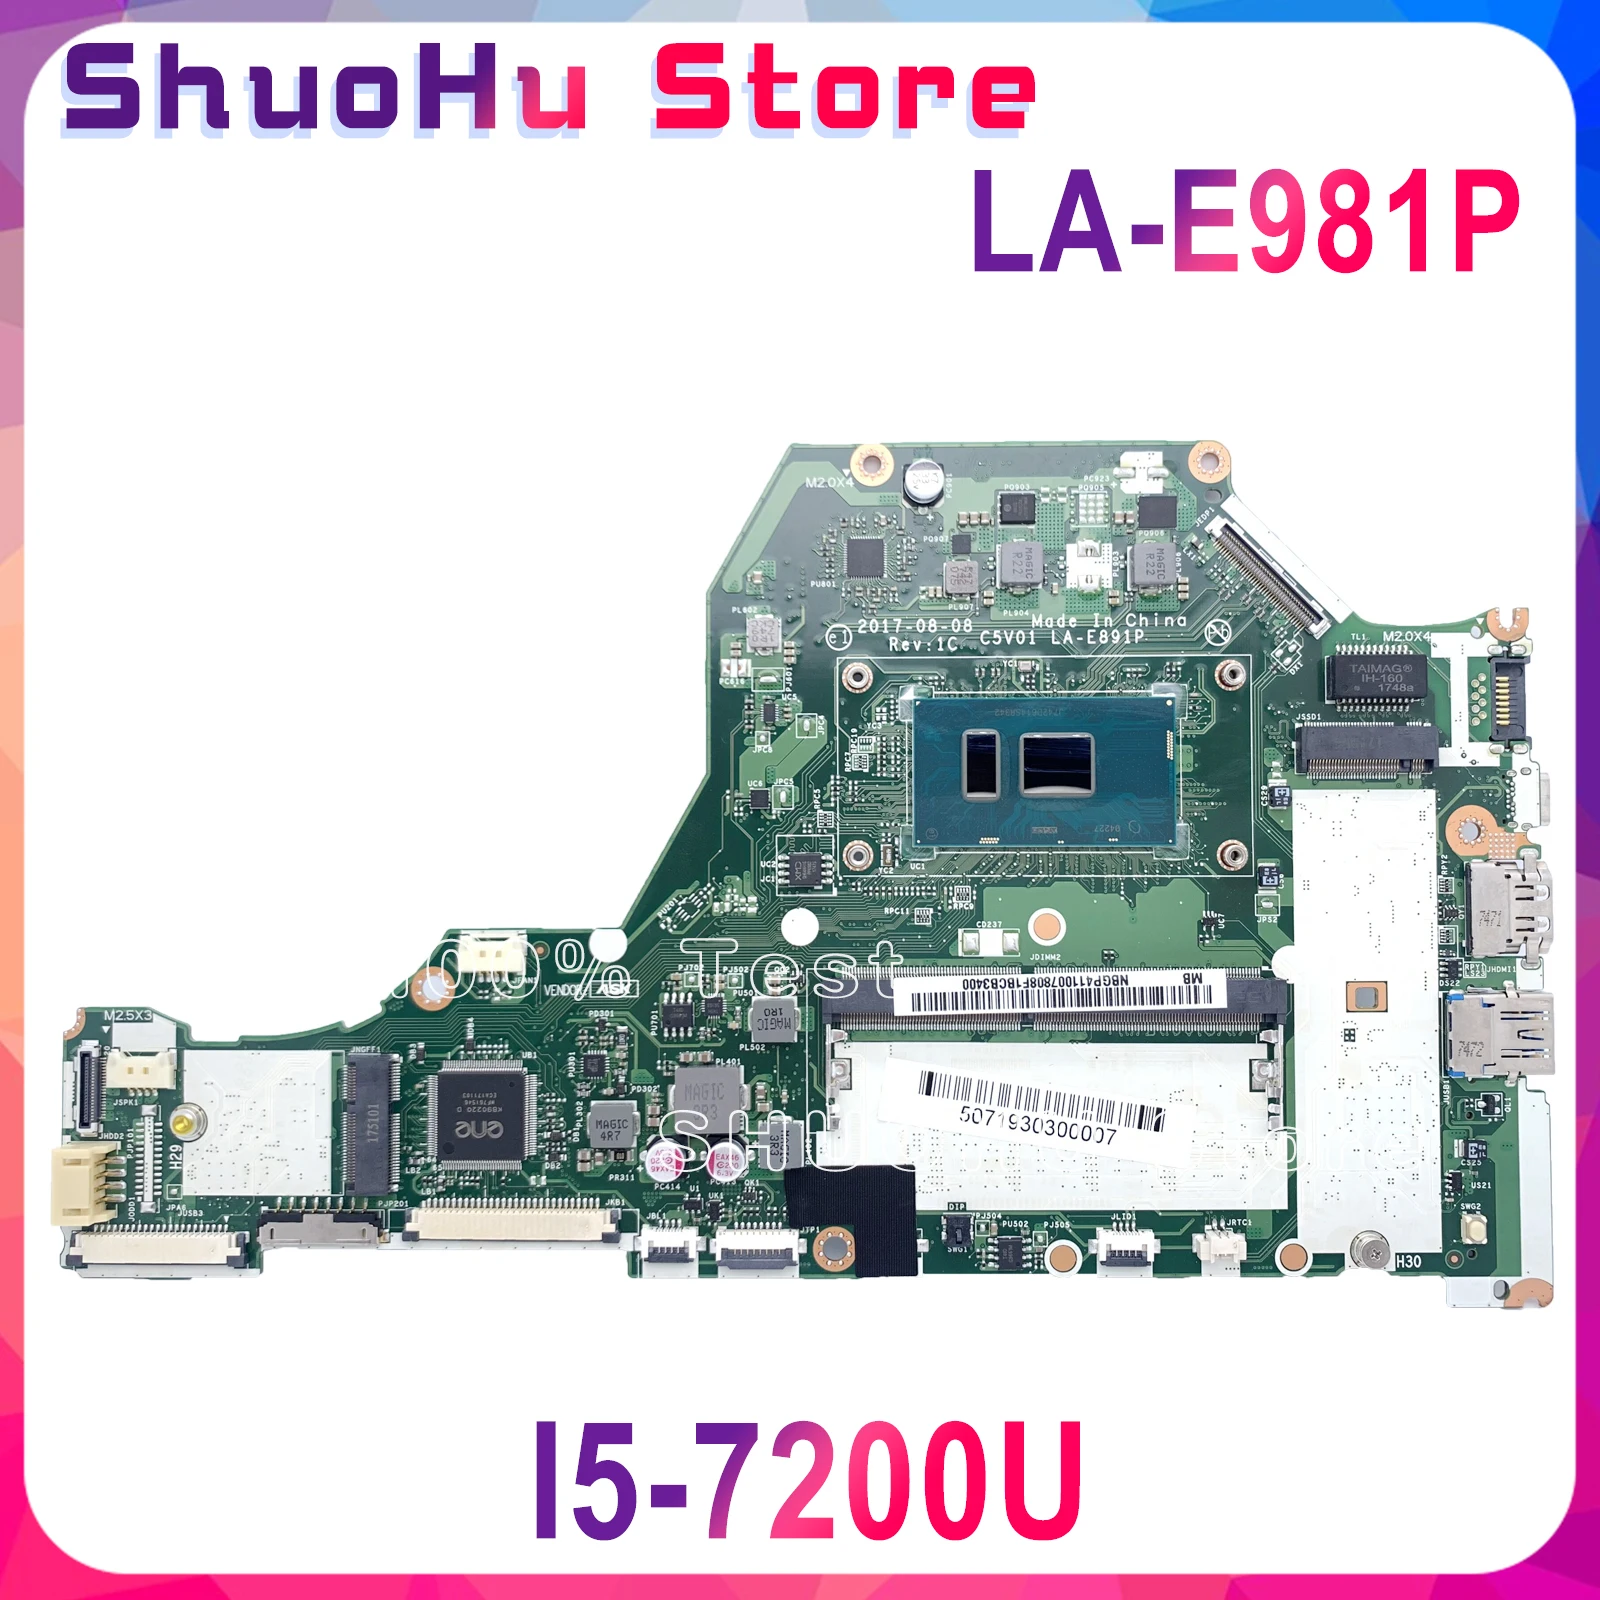 

A515-51 Maintherboard Mor Acer Aspire A615-51G A515-51G A315-51G A517-51G Laptop Motherboard C5V01 LA-E891P I5-7200U 100% Tested